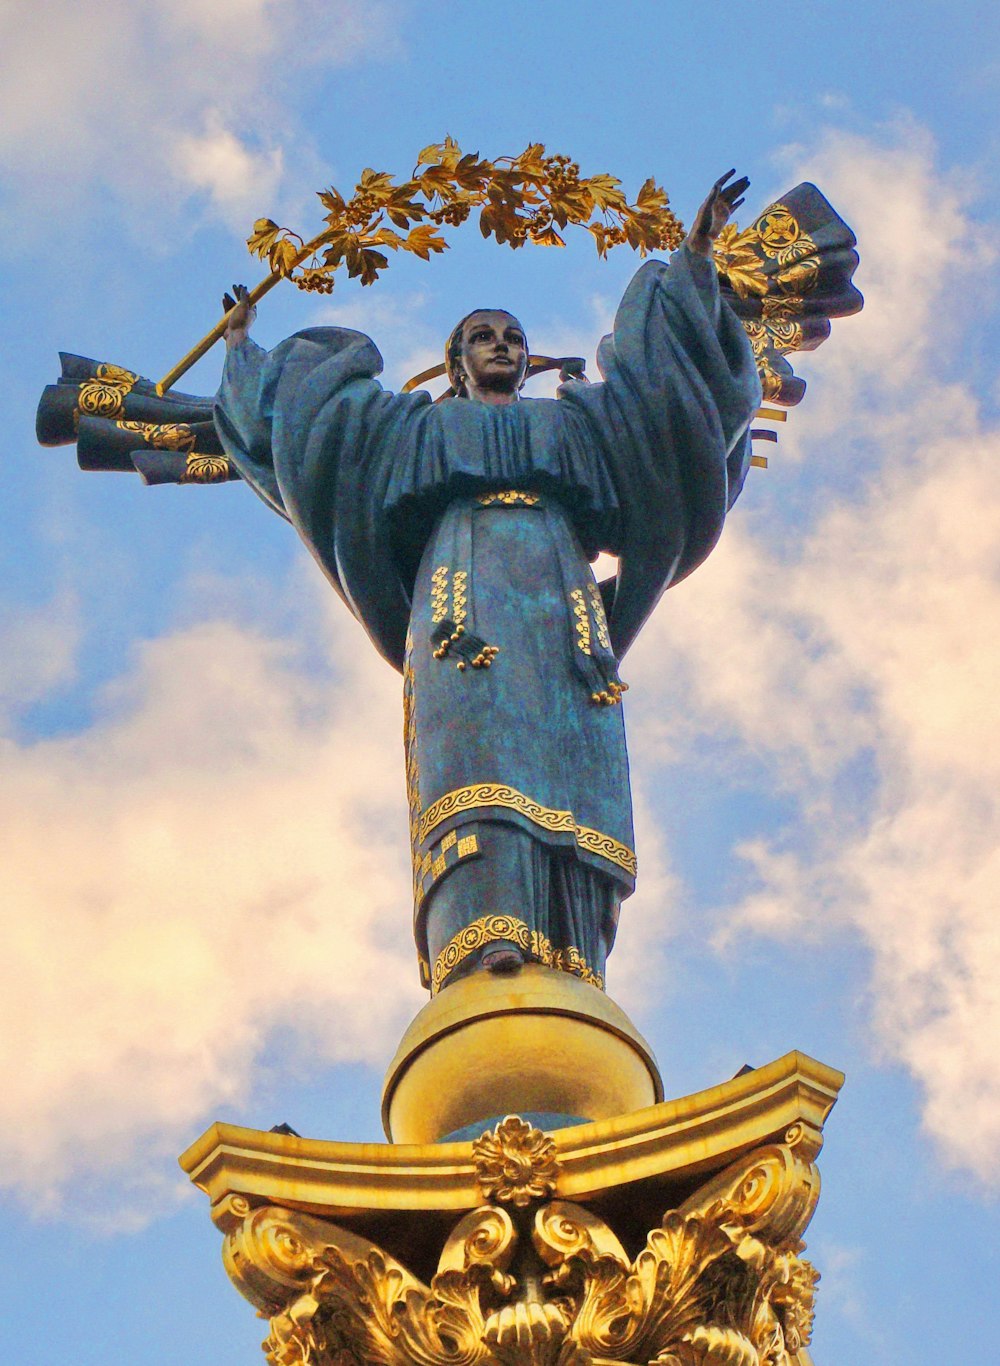 man holding a sword statue